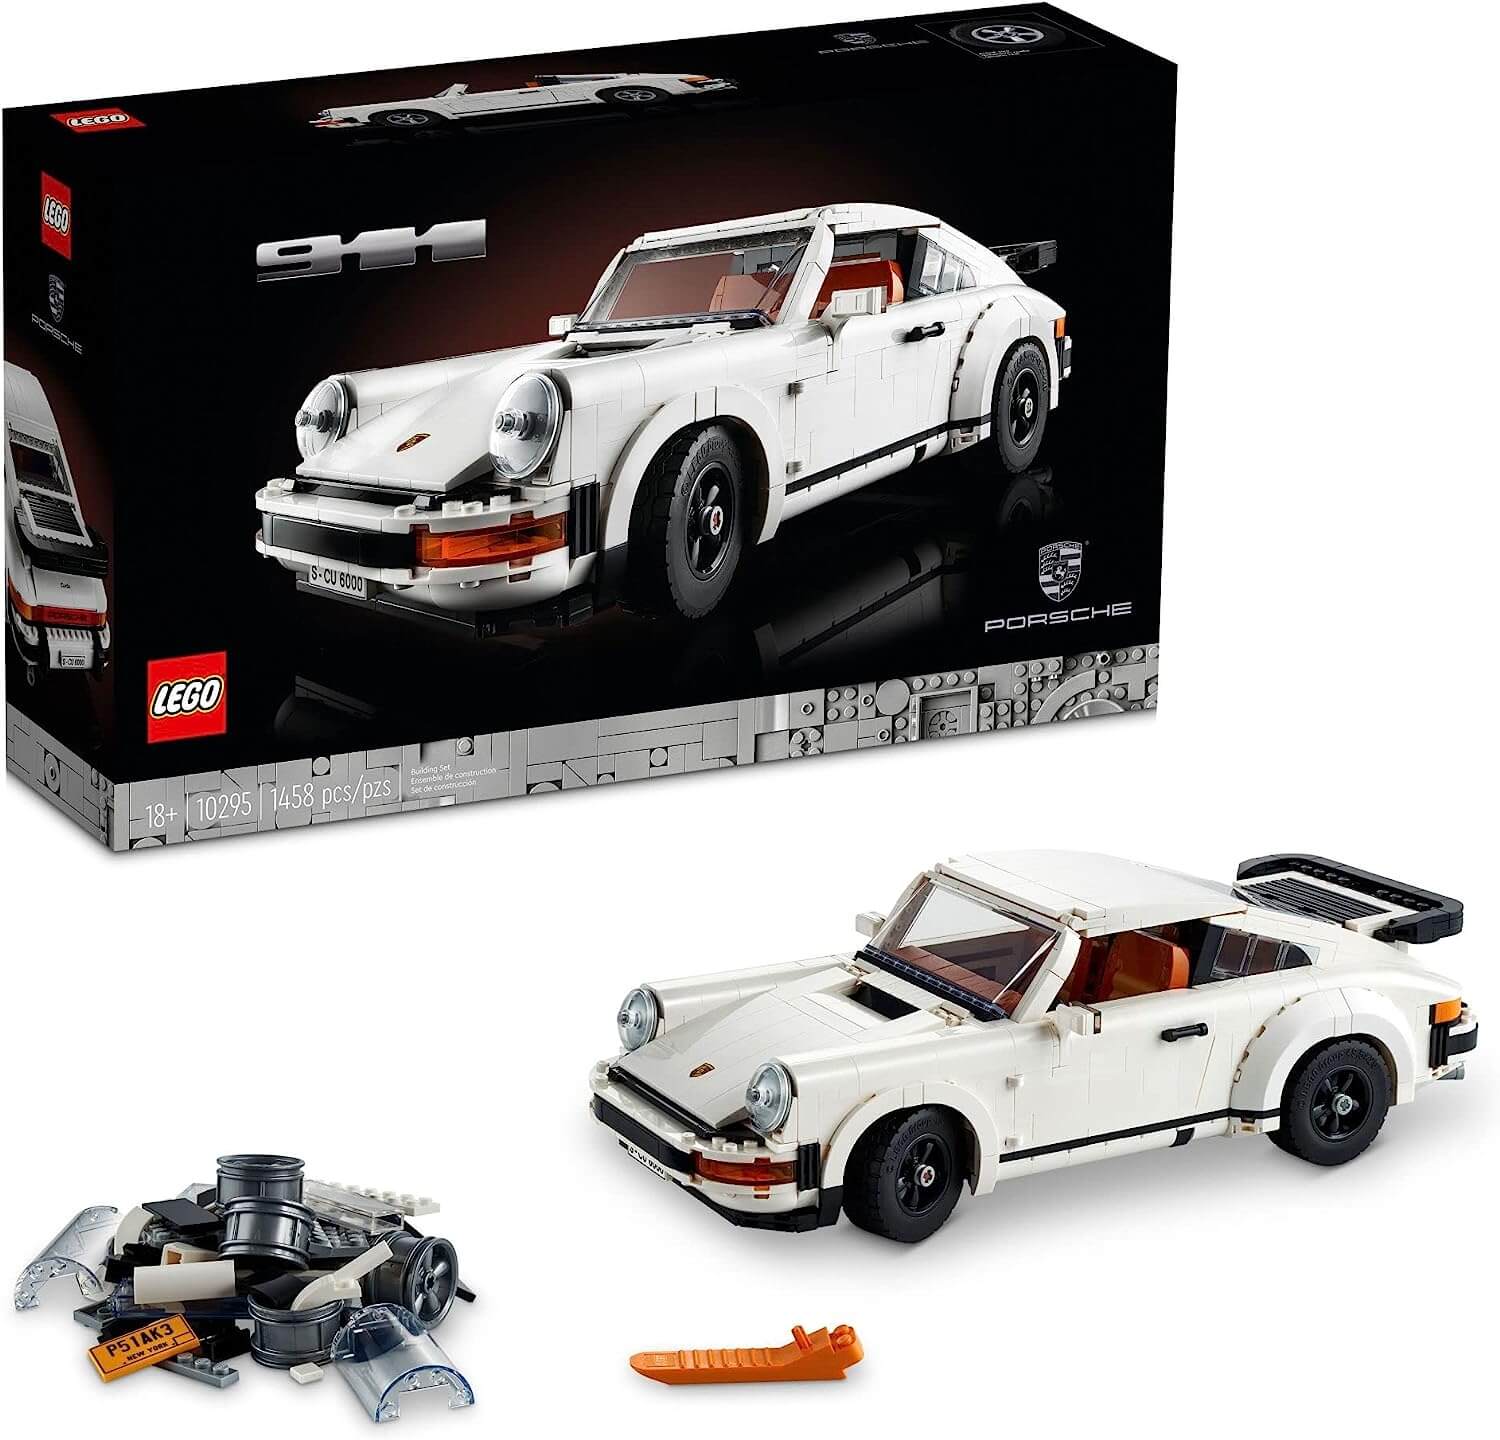 7. LEGO Creator Expert Porsche 911 (#10211) - $149.99 🏎